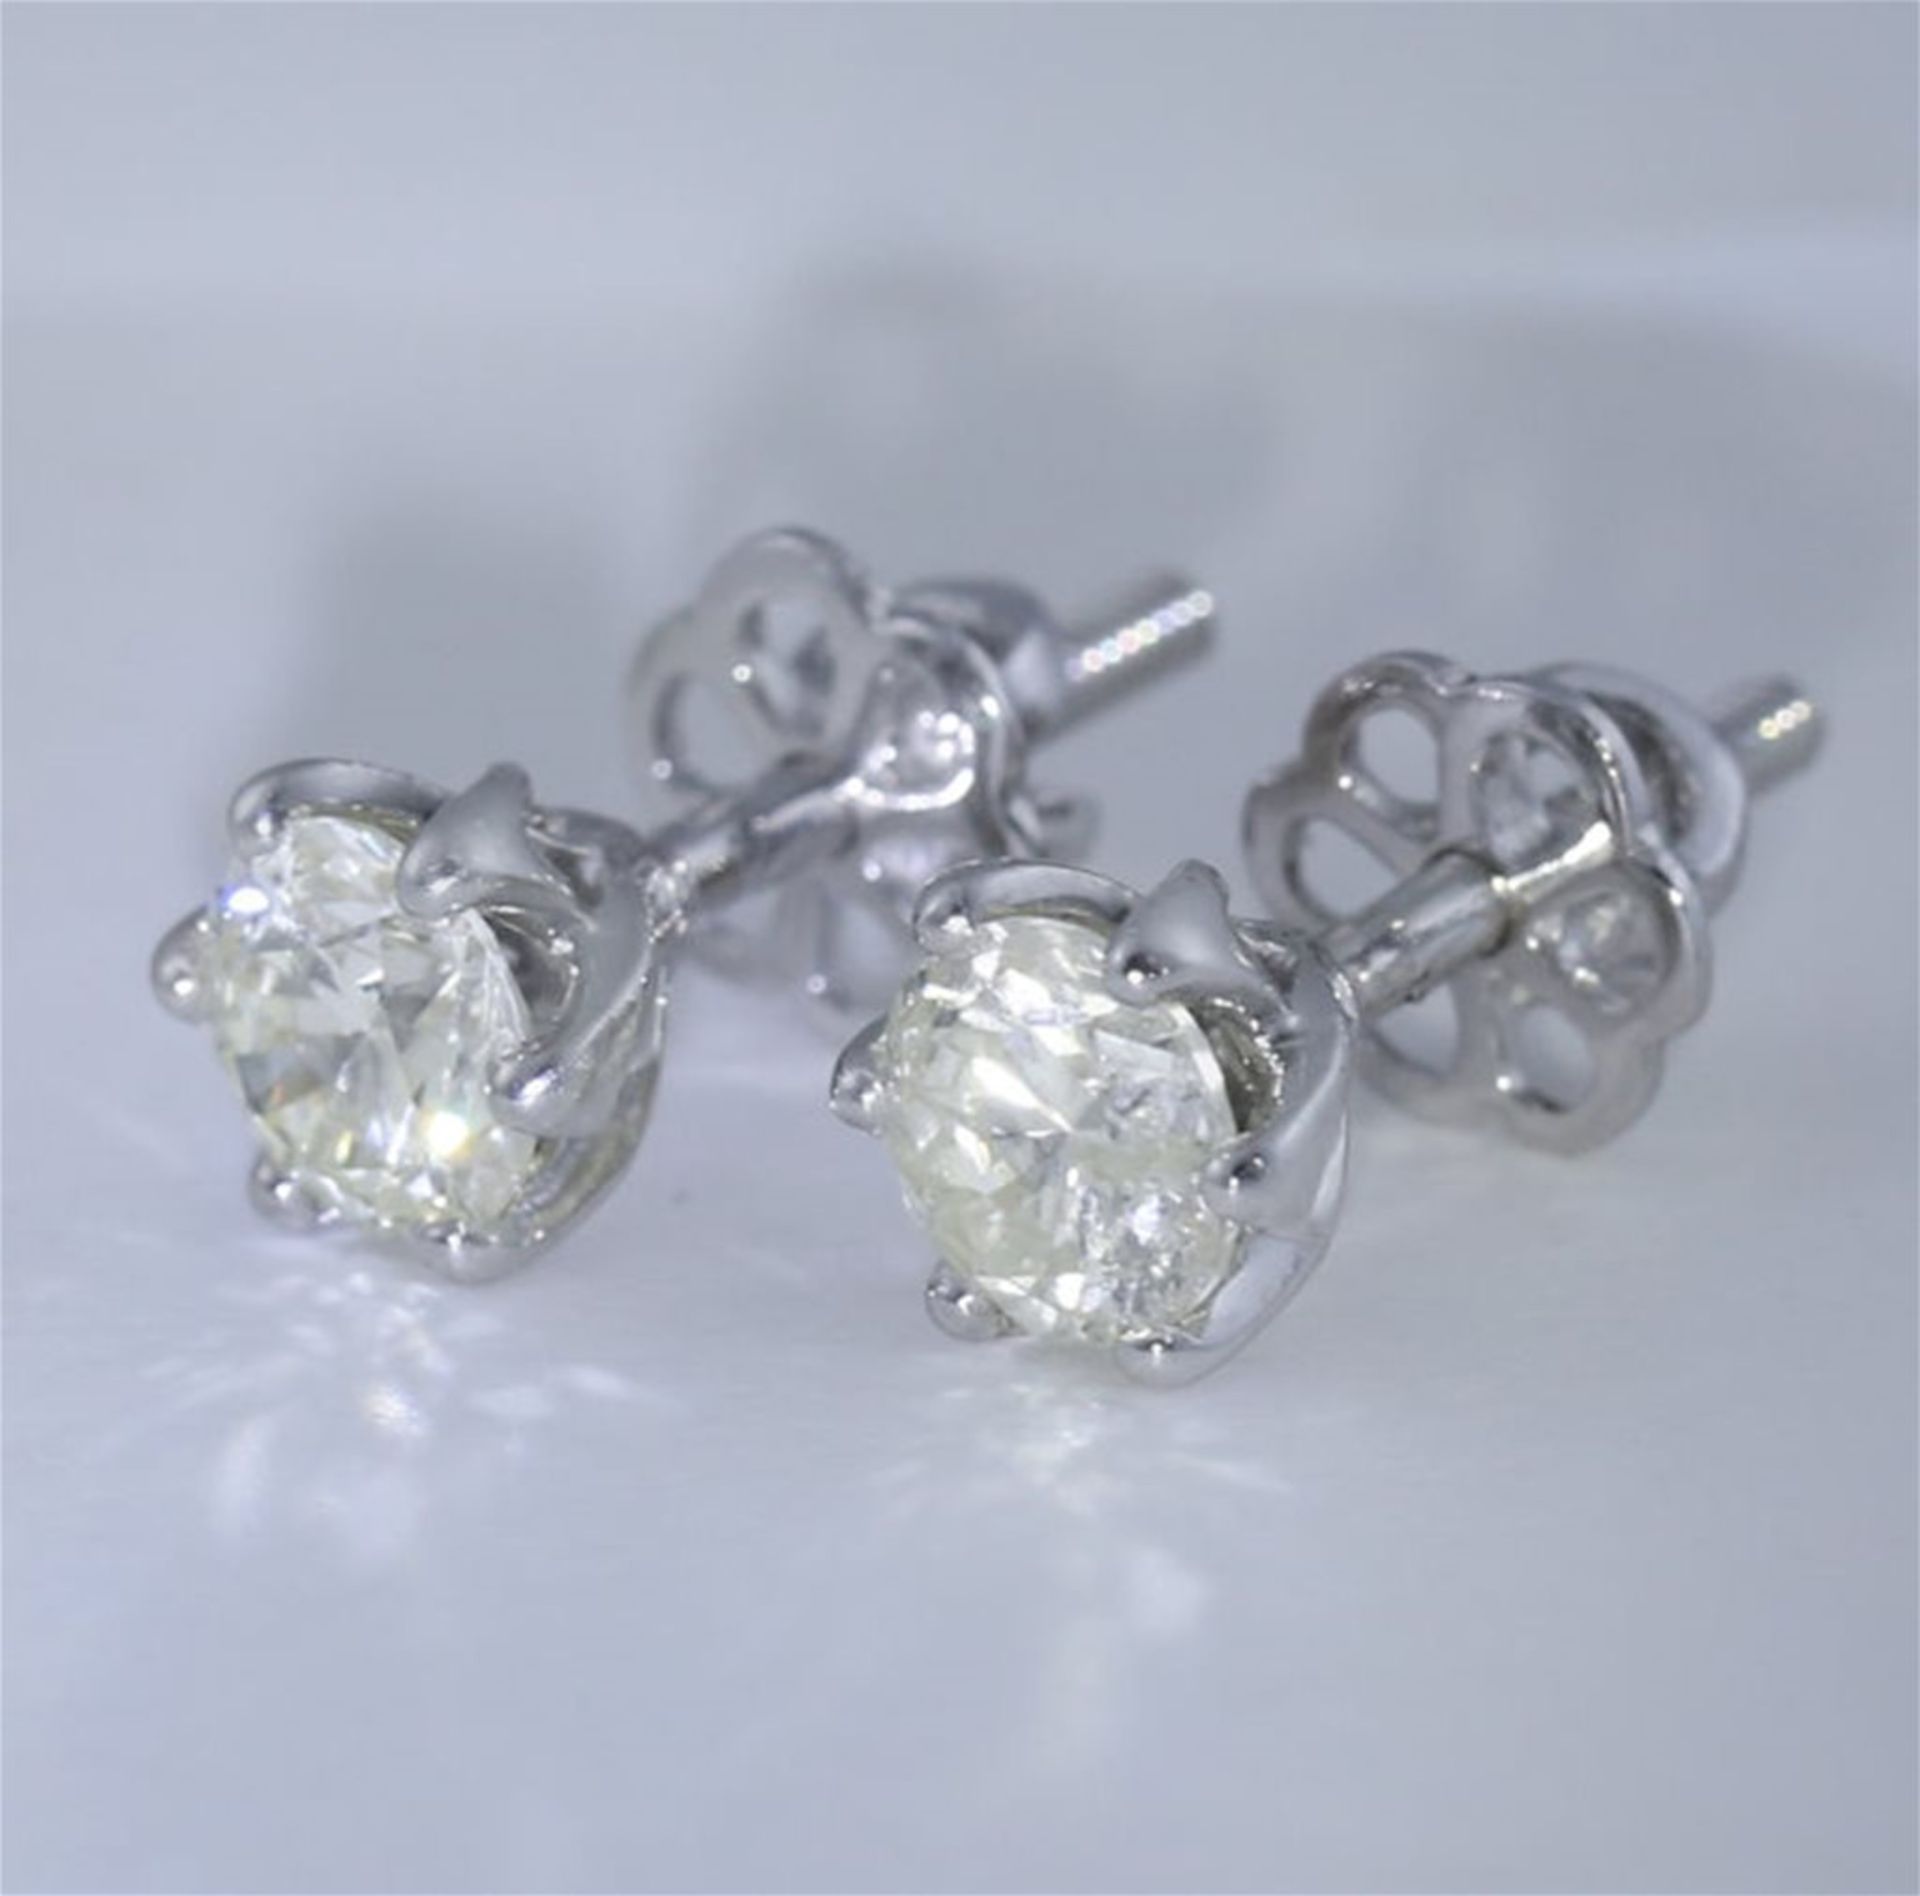 14 K / 585 White Gold Diamond Solitaire Earrings - Image 2 of 6